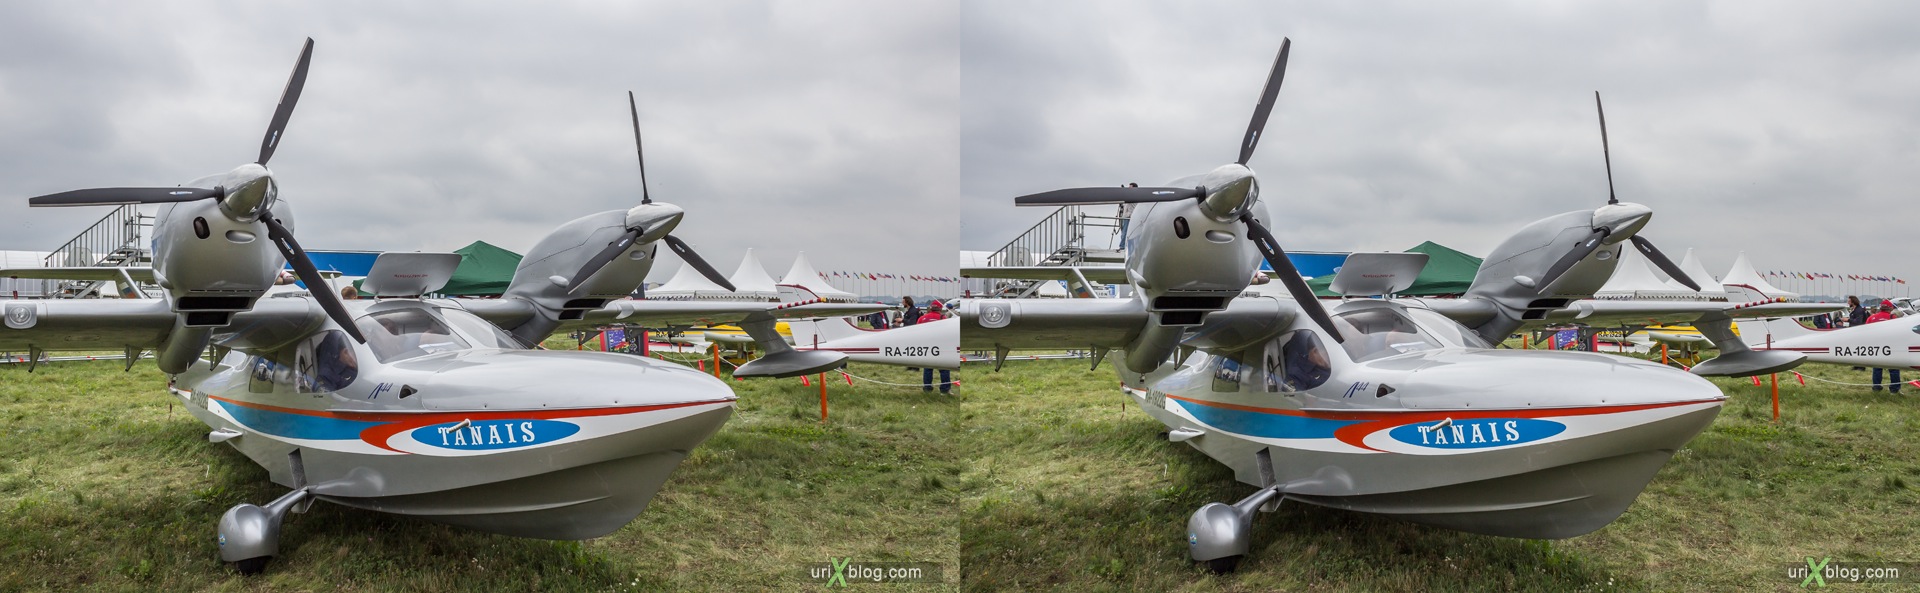 2013, L-44, MAKS, International Aviation and Space Salon, Russia, Ramenskoye airfield, airplane, 3D, stereo pair, cross-eyed, crossview, cross view stereo pair, stereoscopic